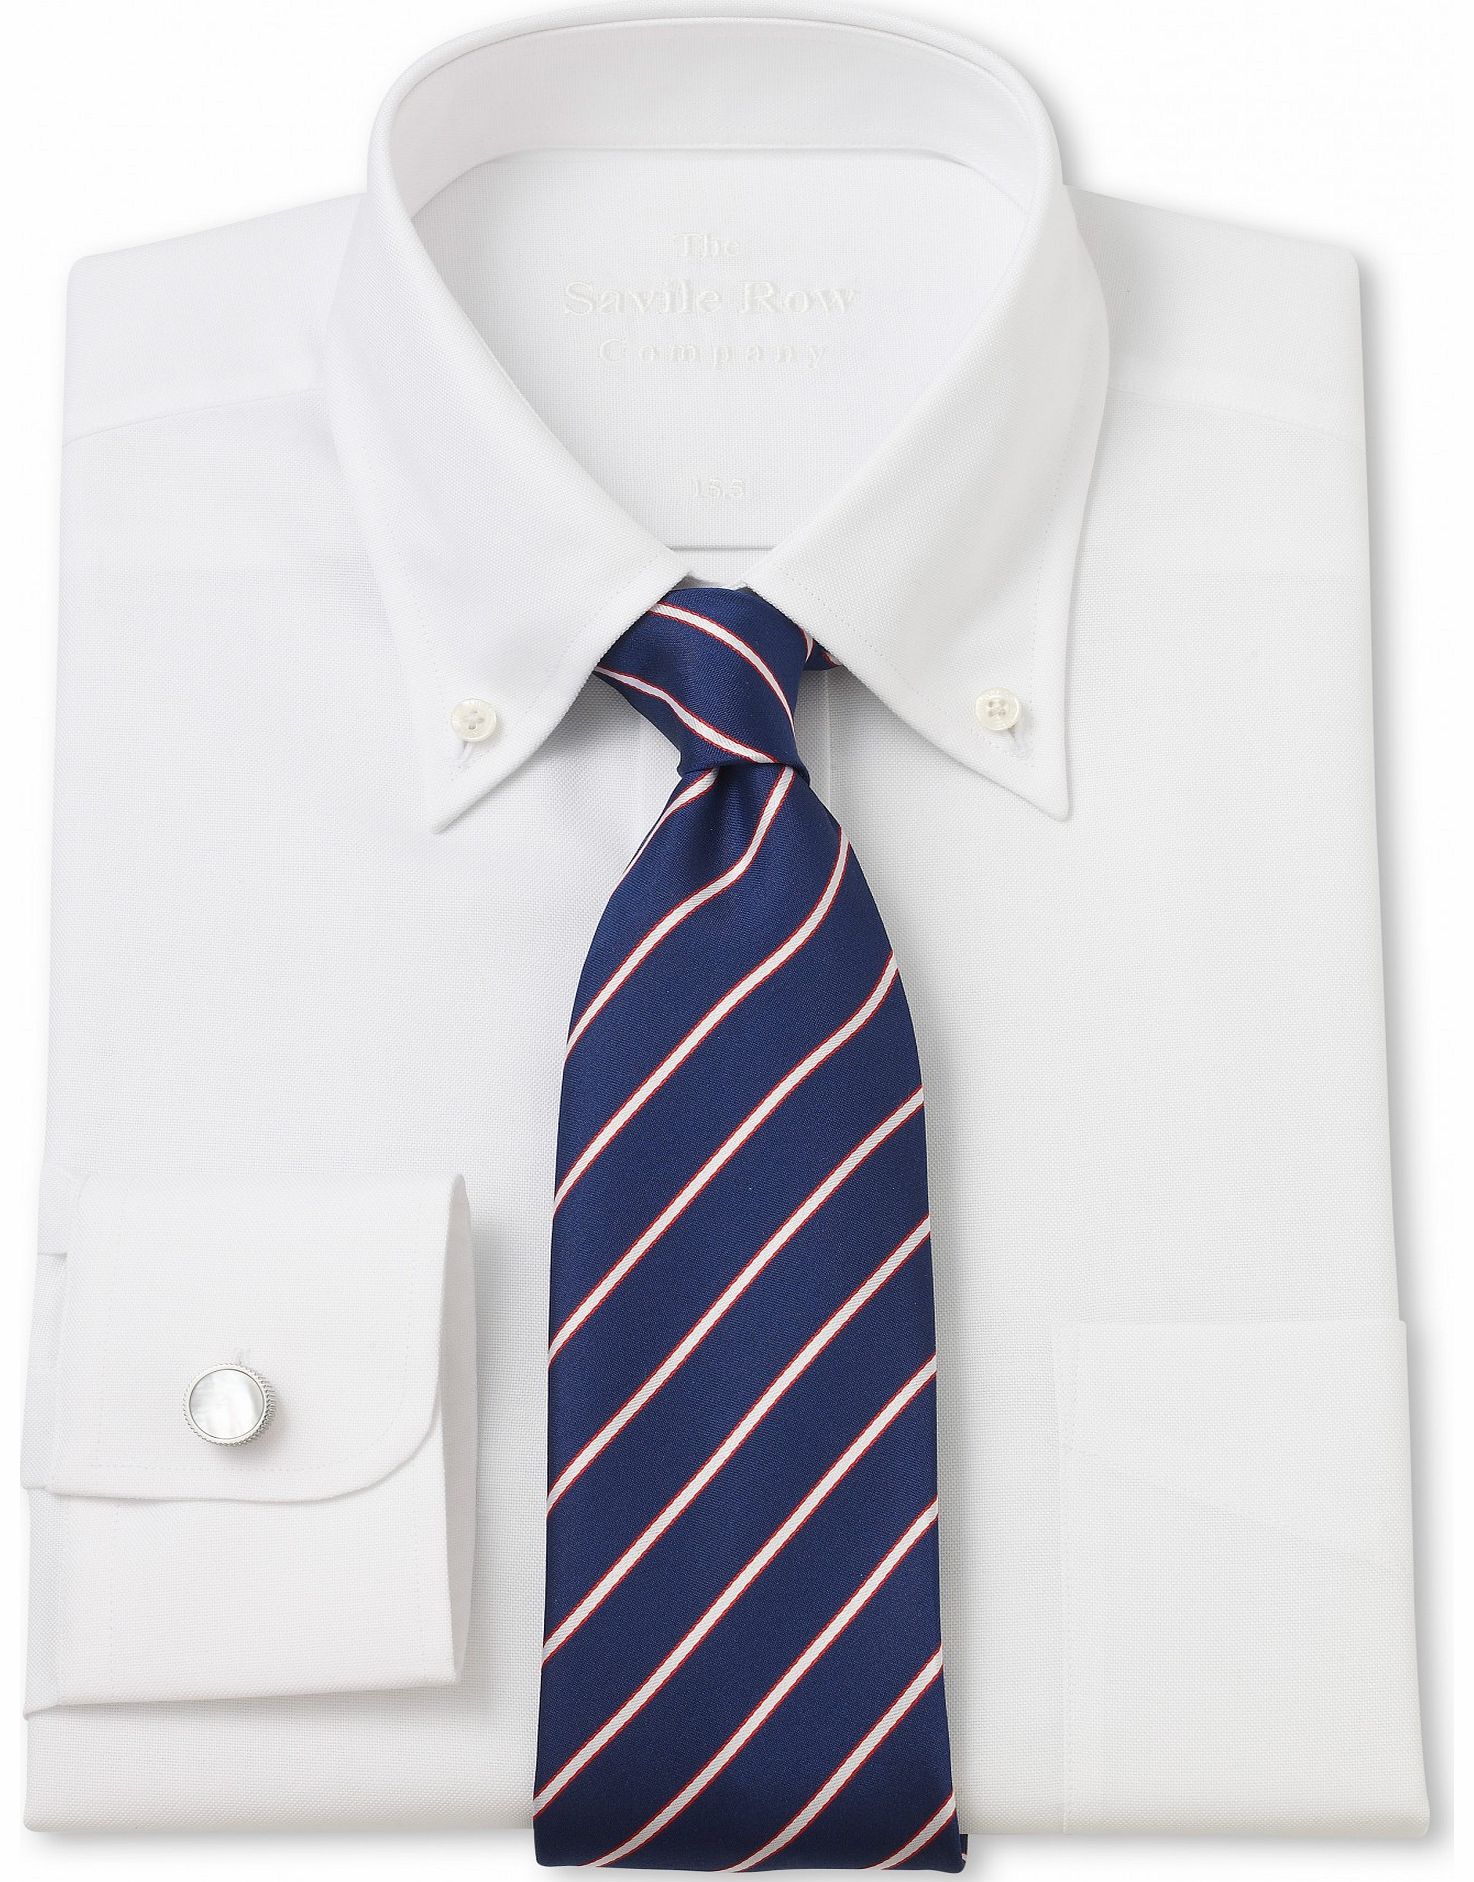 Savile Row Company White Oxford Button Down Classic Shirt 15 1/2``